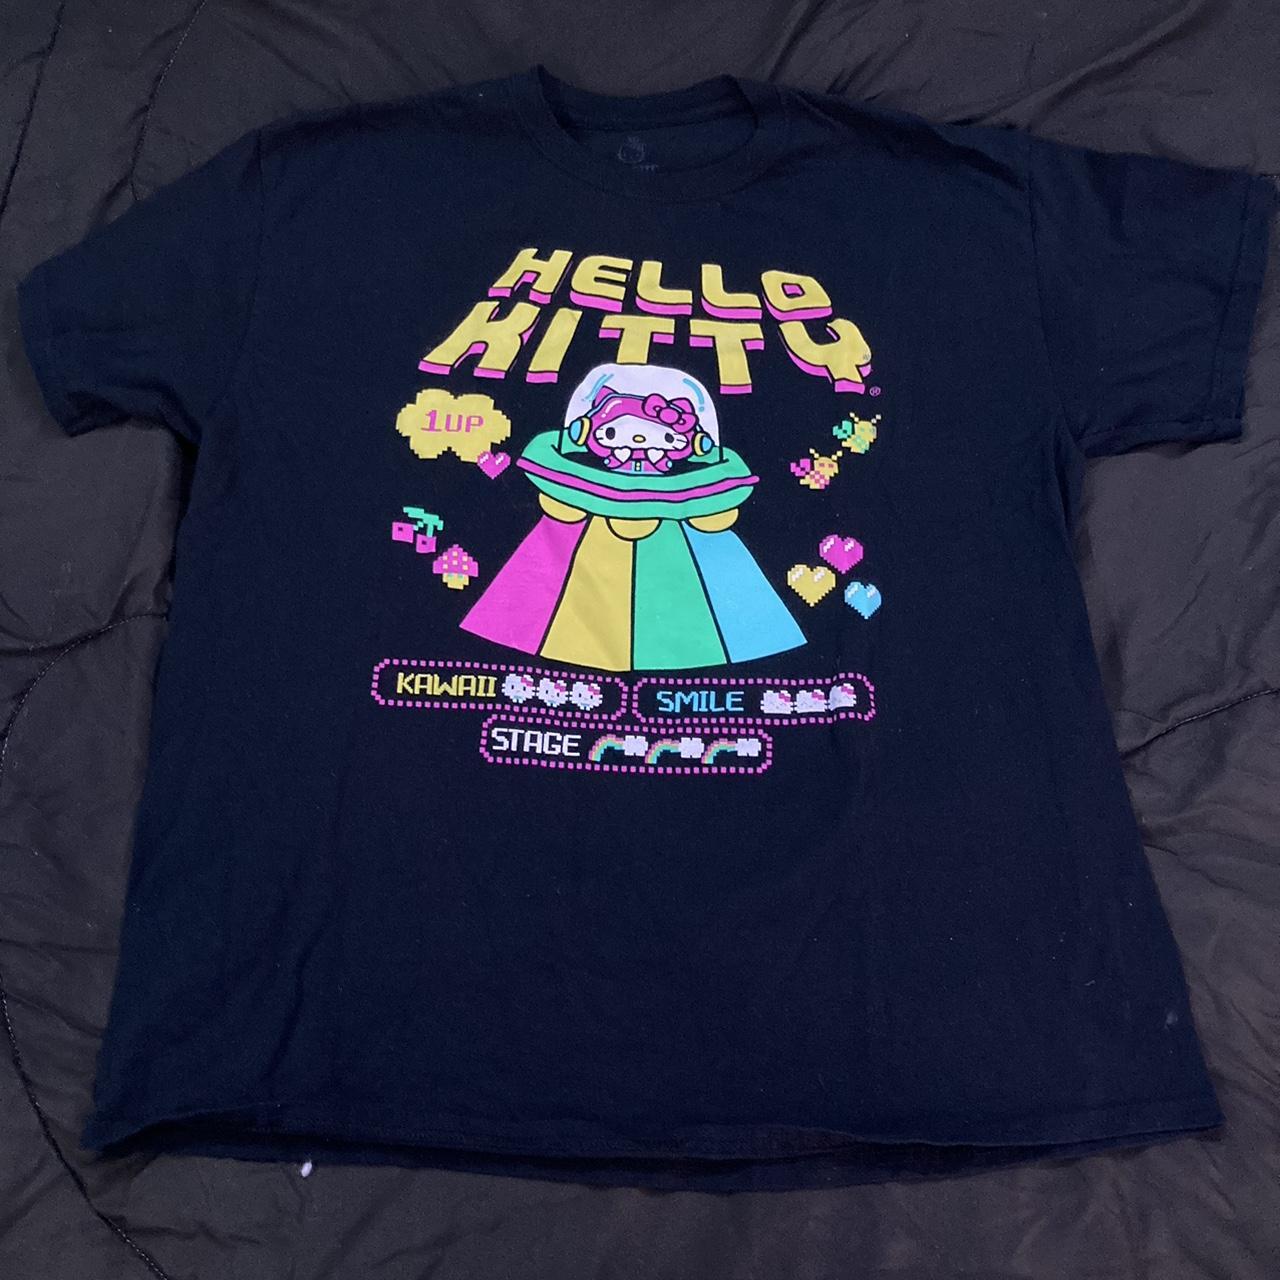 Hello Kitty Men's Black and Yellow T-shirt | Depop